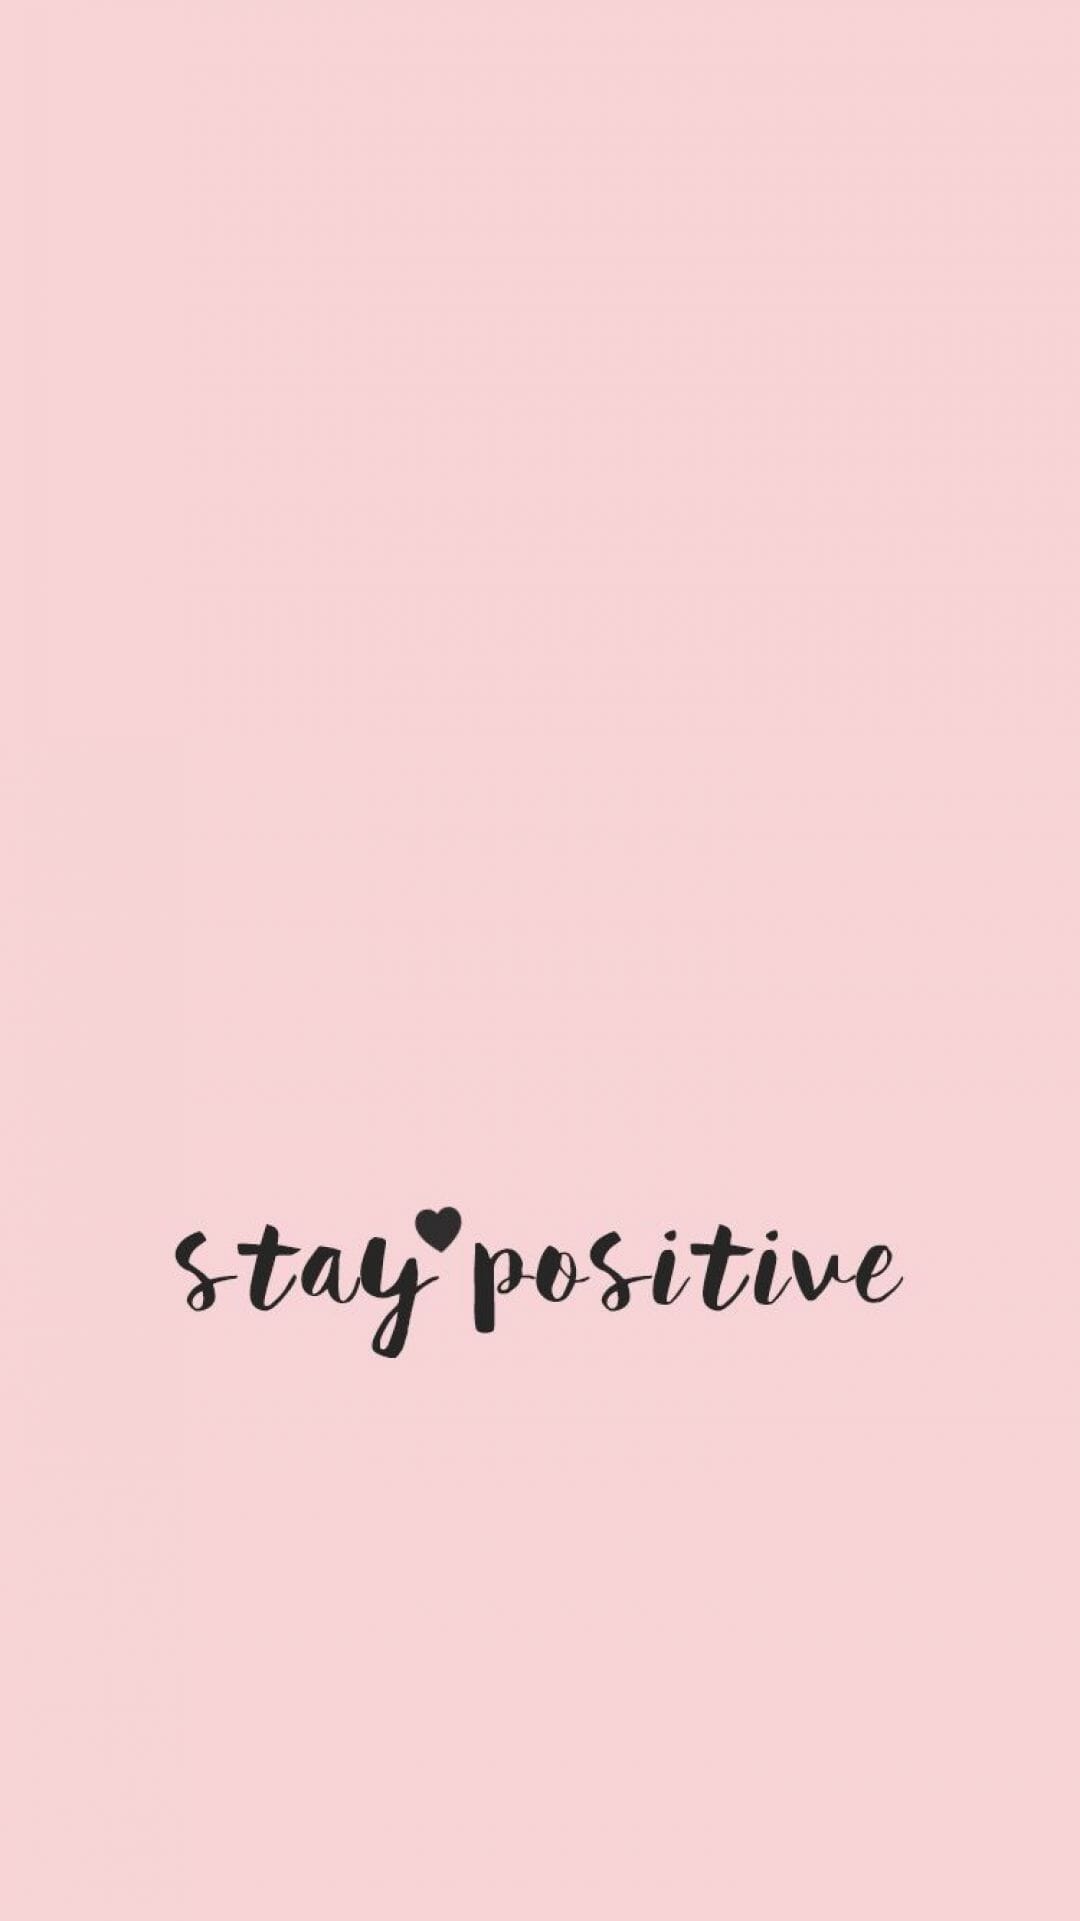 Stay positive wallpaper - Positive, inspirational